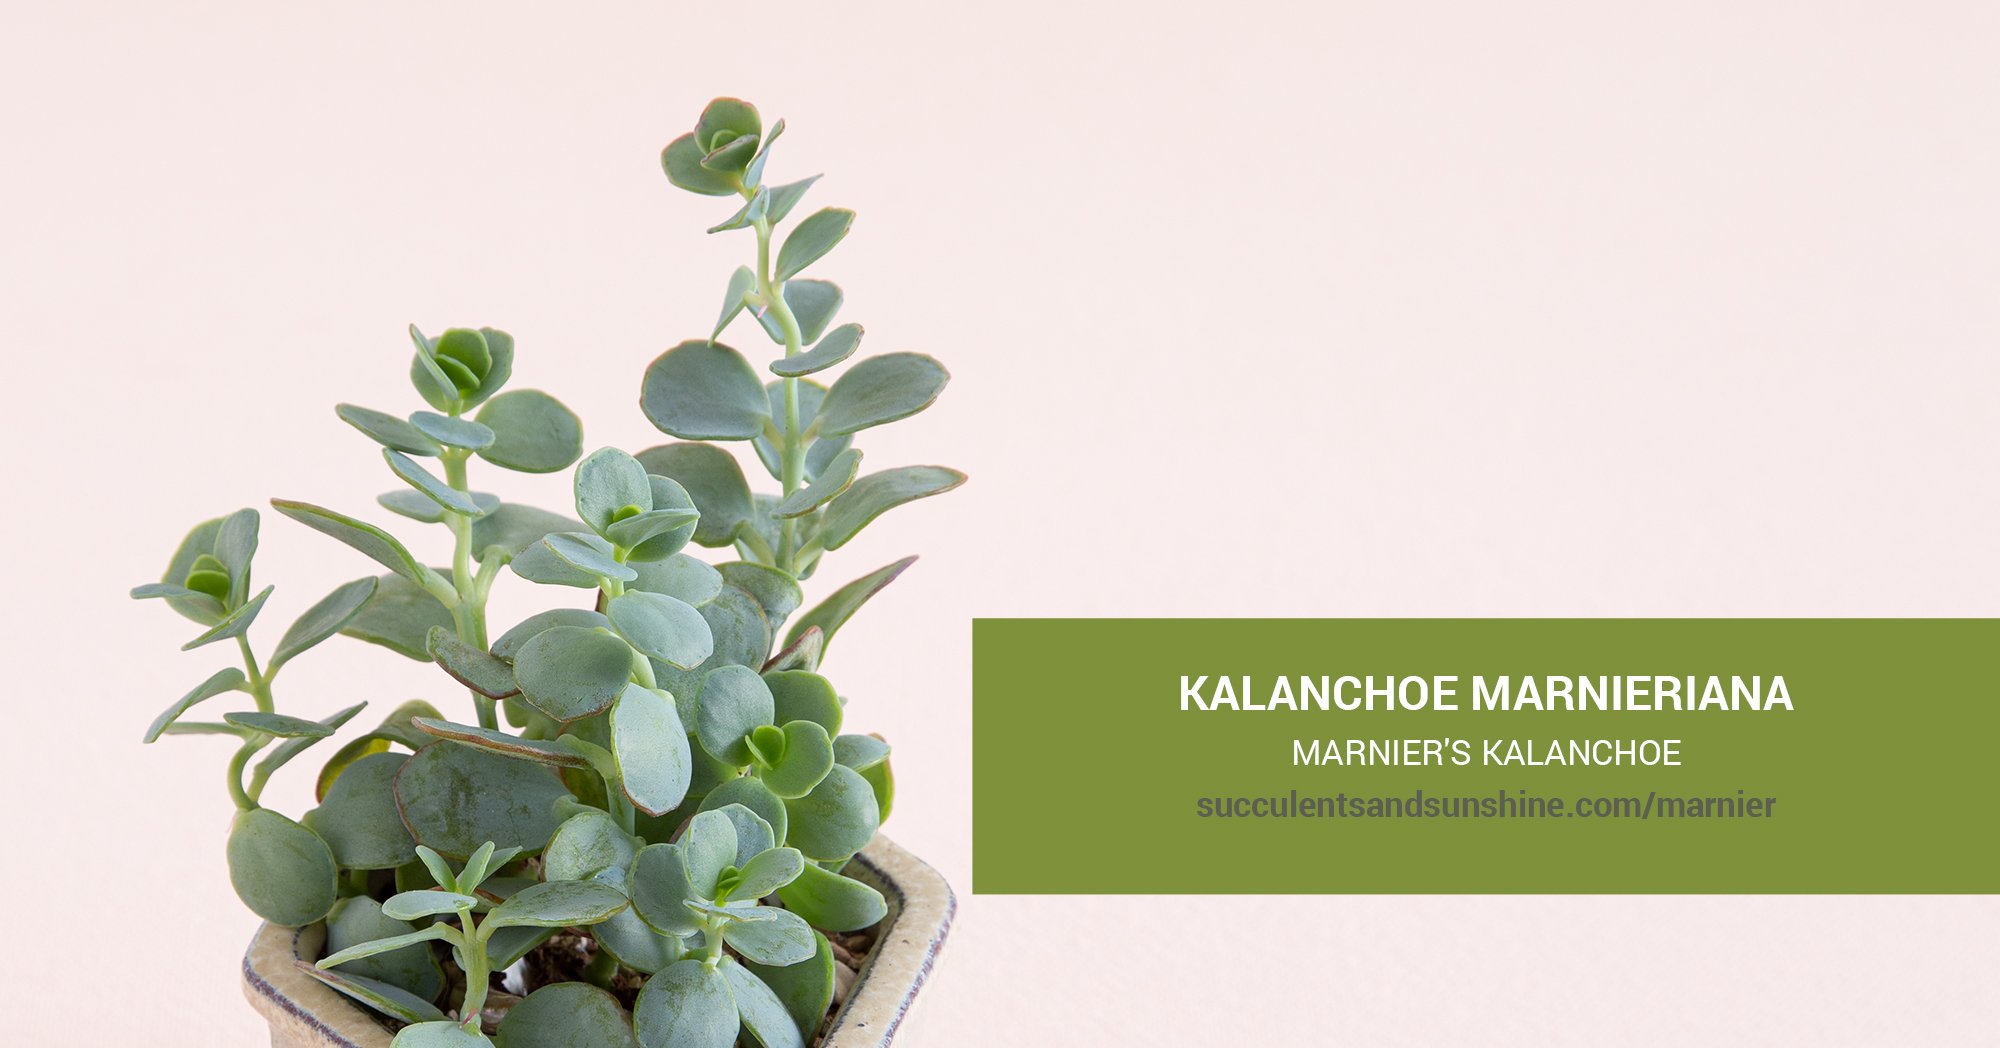 General Care for Kalanchoe marnieriana “Marnier